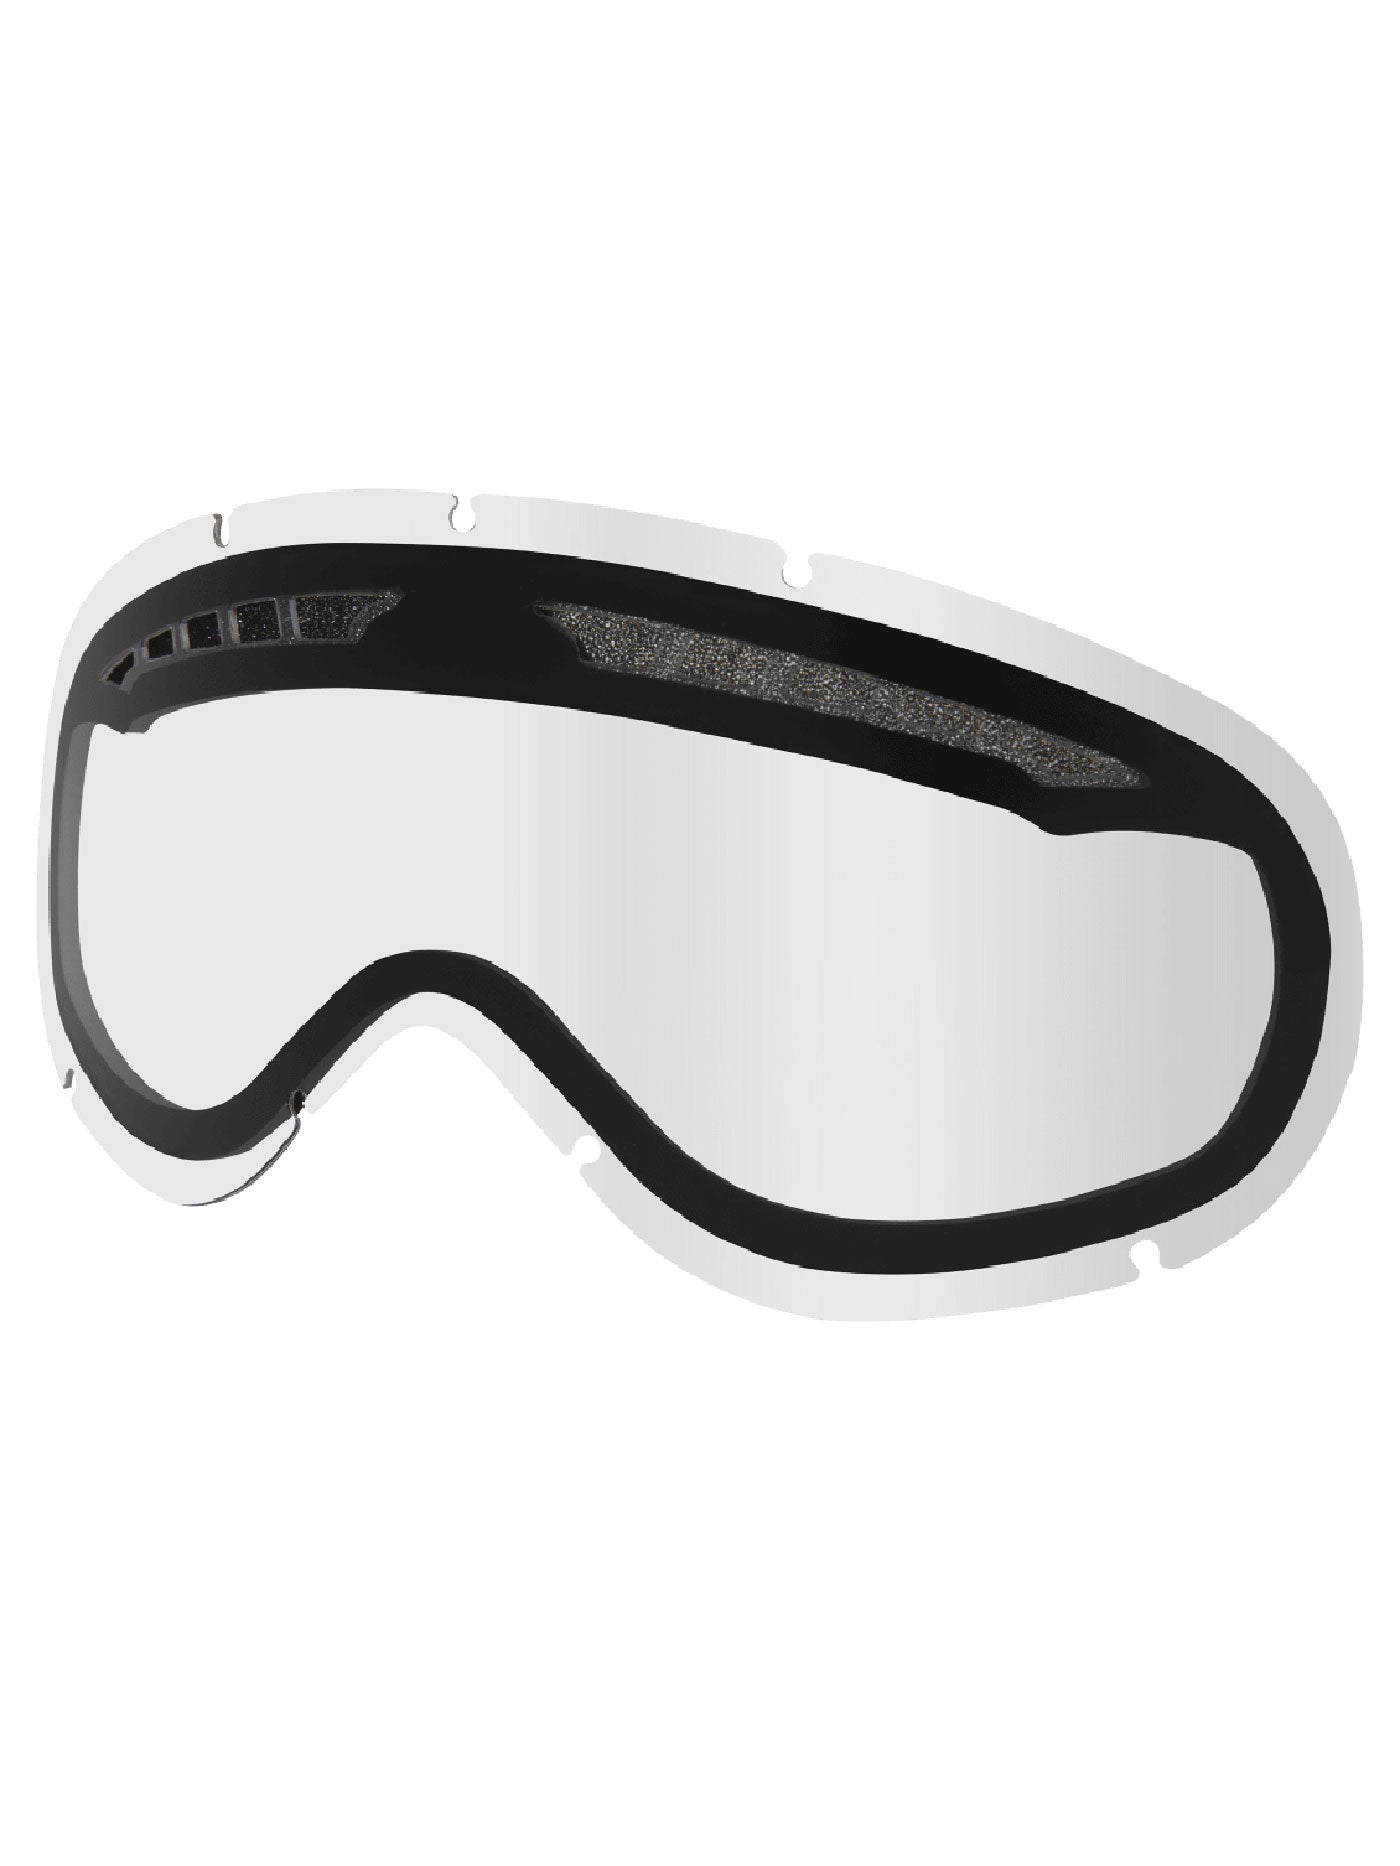 Dragon DX Snowboard Goggle Lens